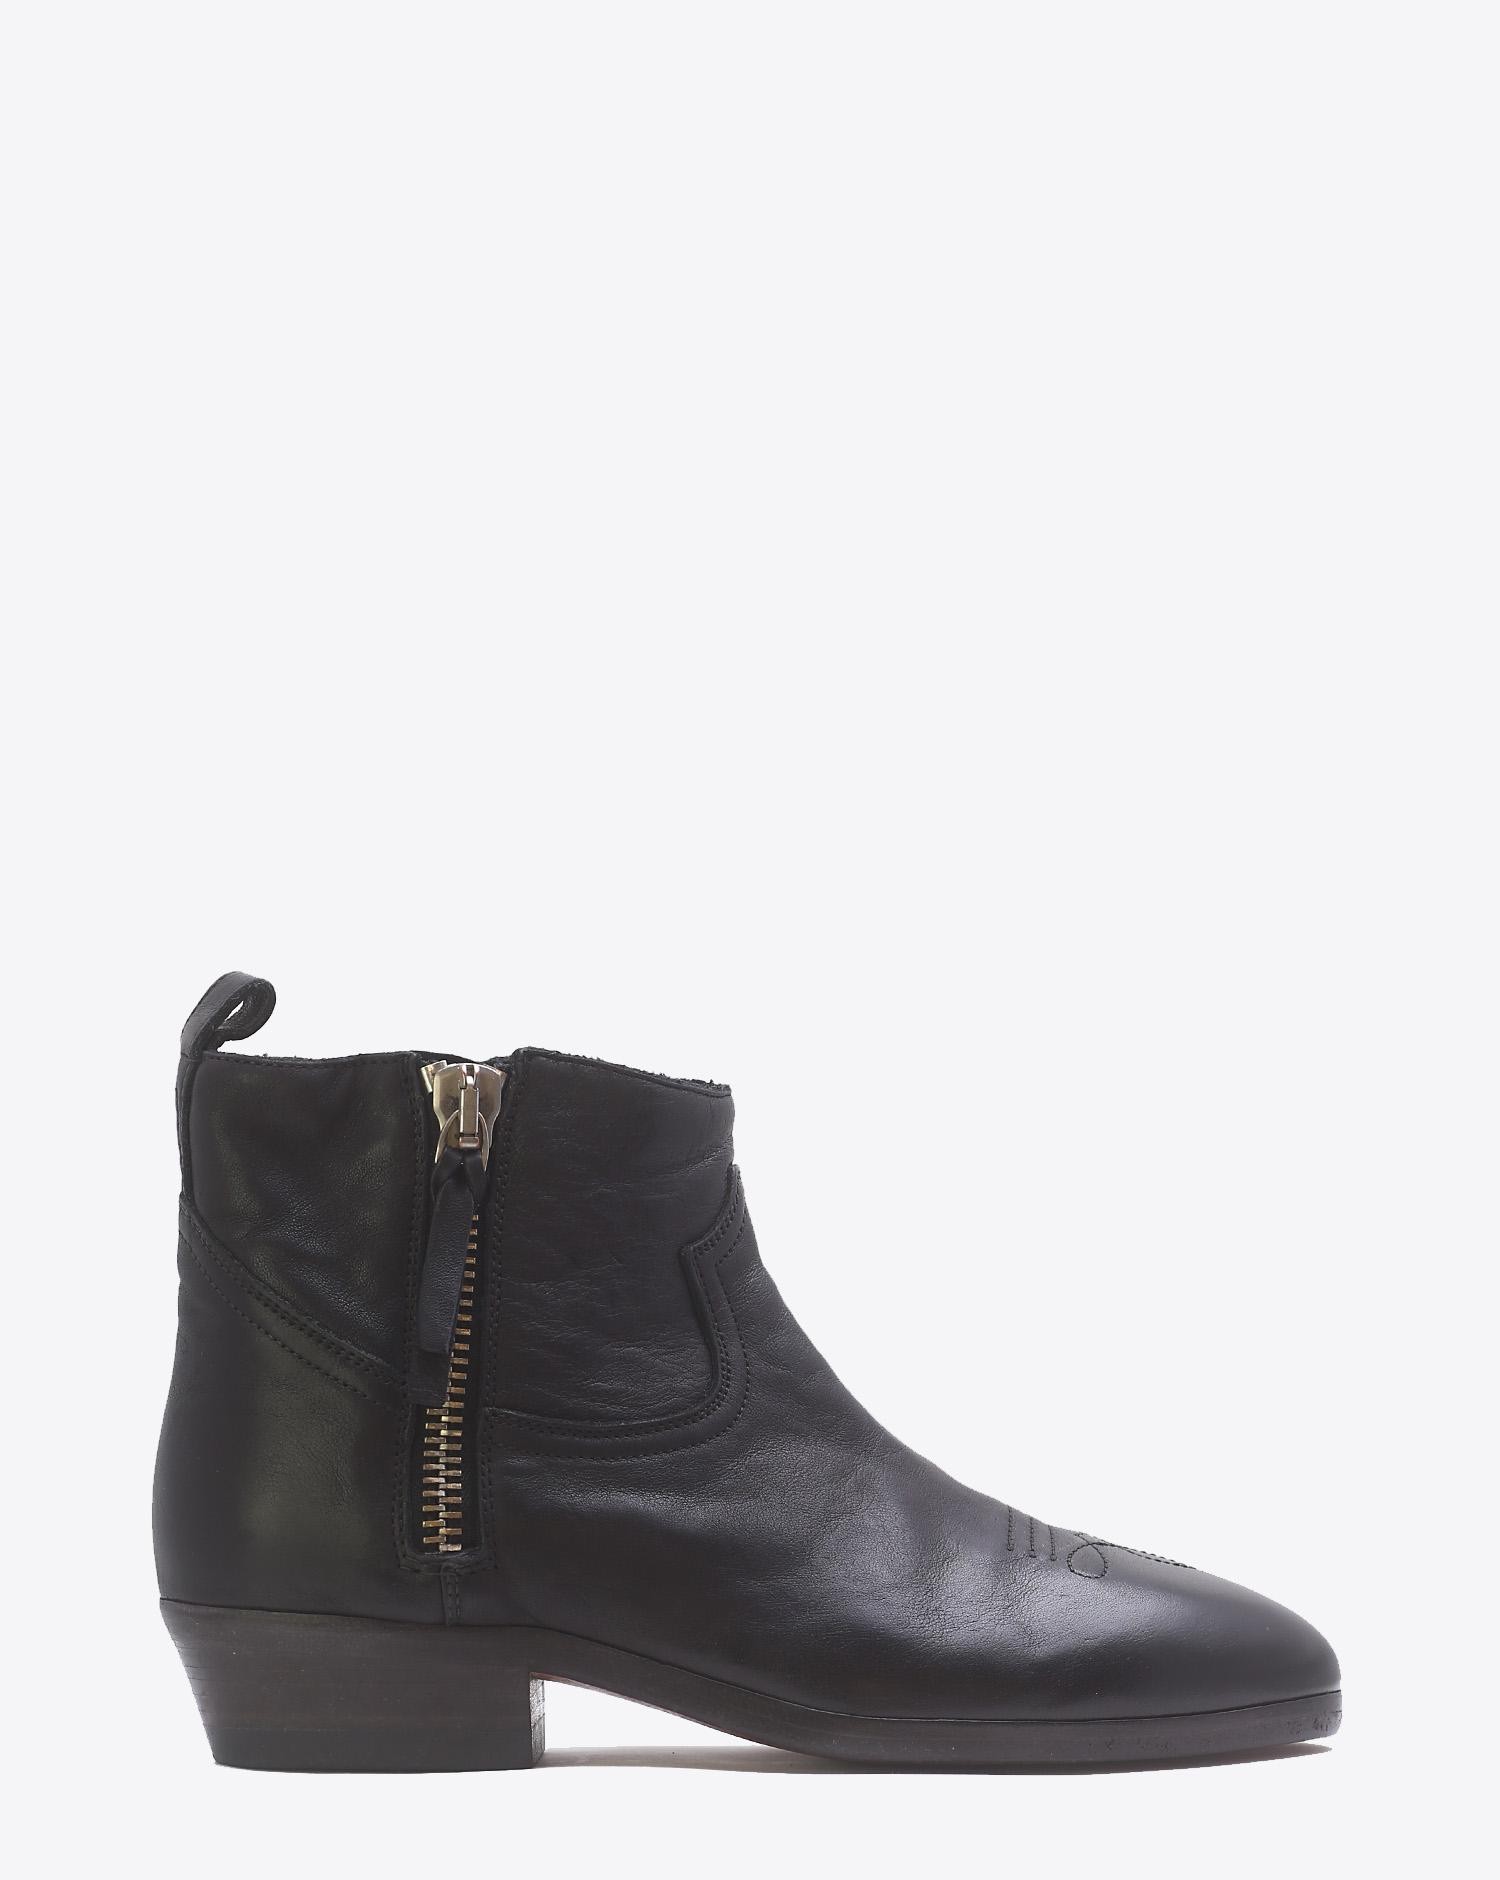 Golden Goose Woman Chaussures Pré-Collection Boots Viand - Black Leather  